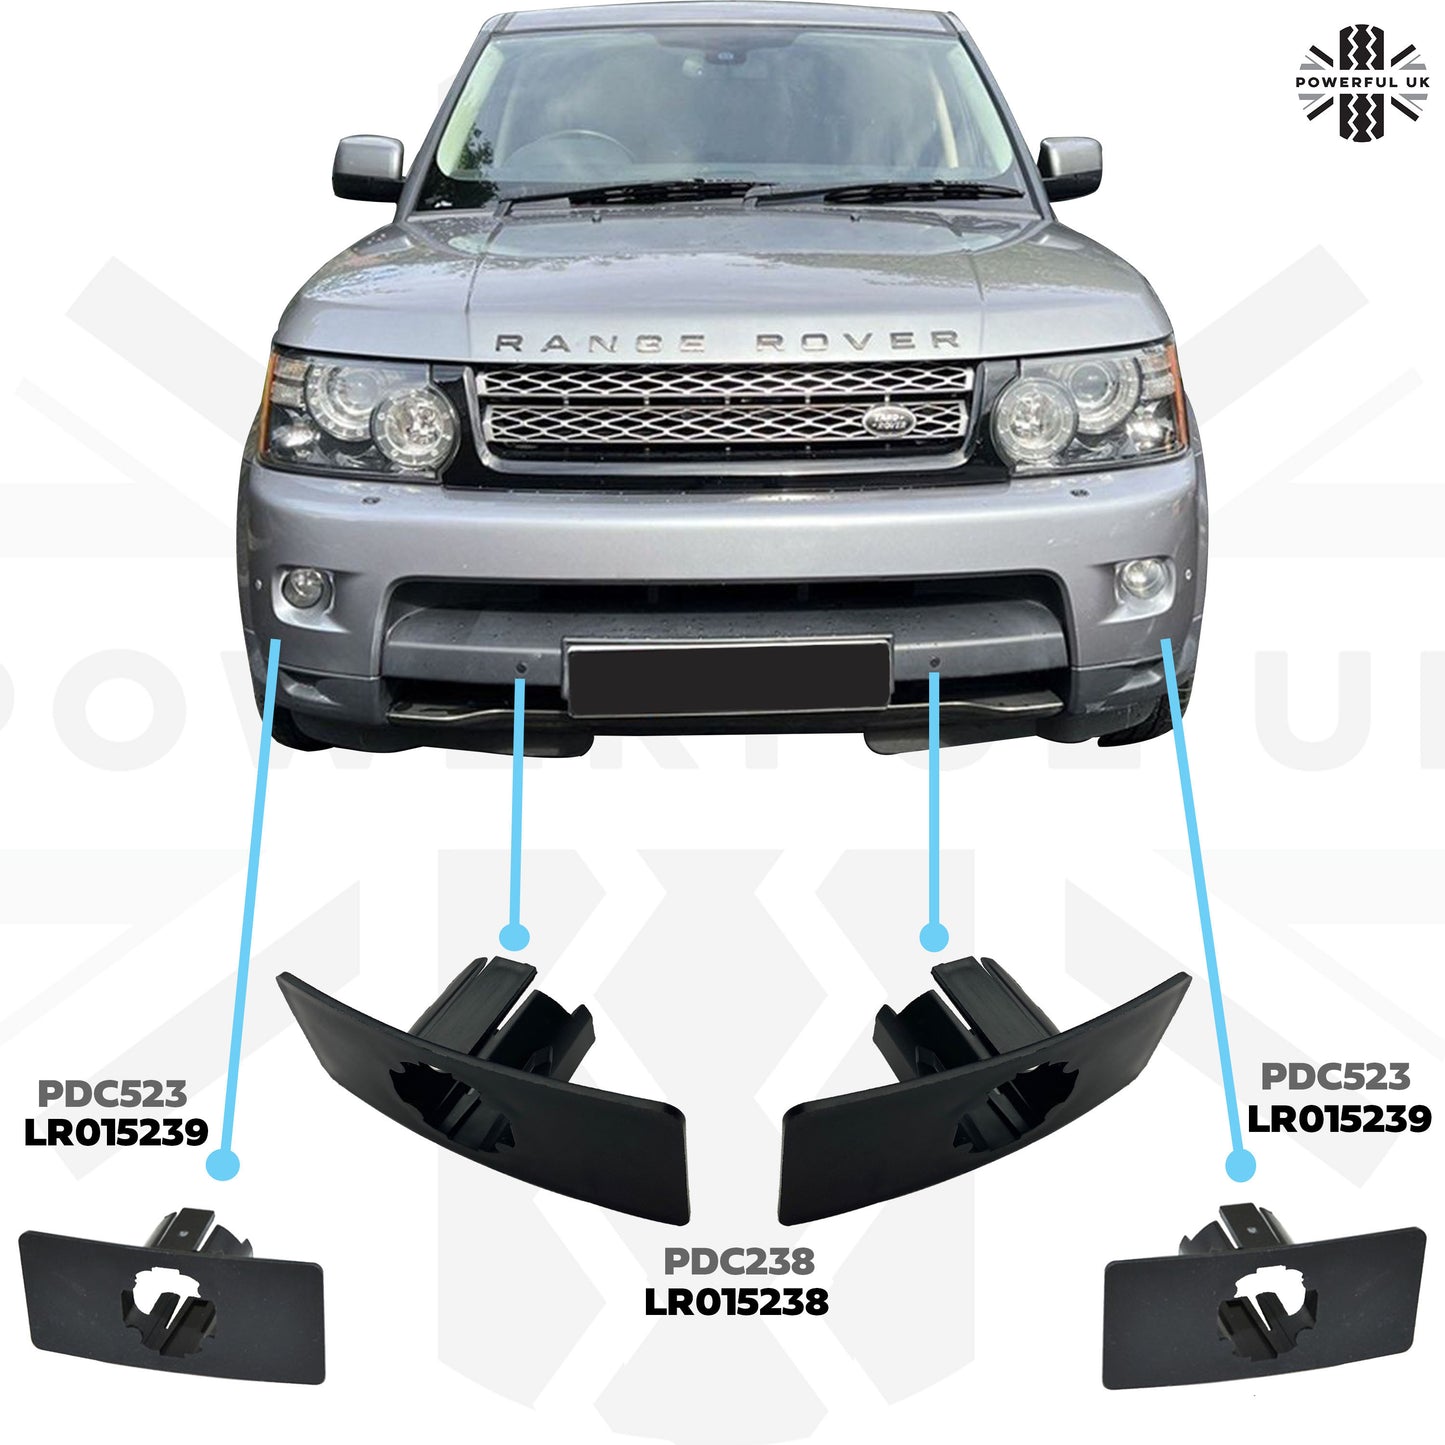 Genuine Parking Sensor Holders for Front & Rear Bumpers for Range Rover Sport L320 - Pair